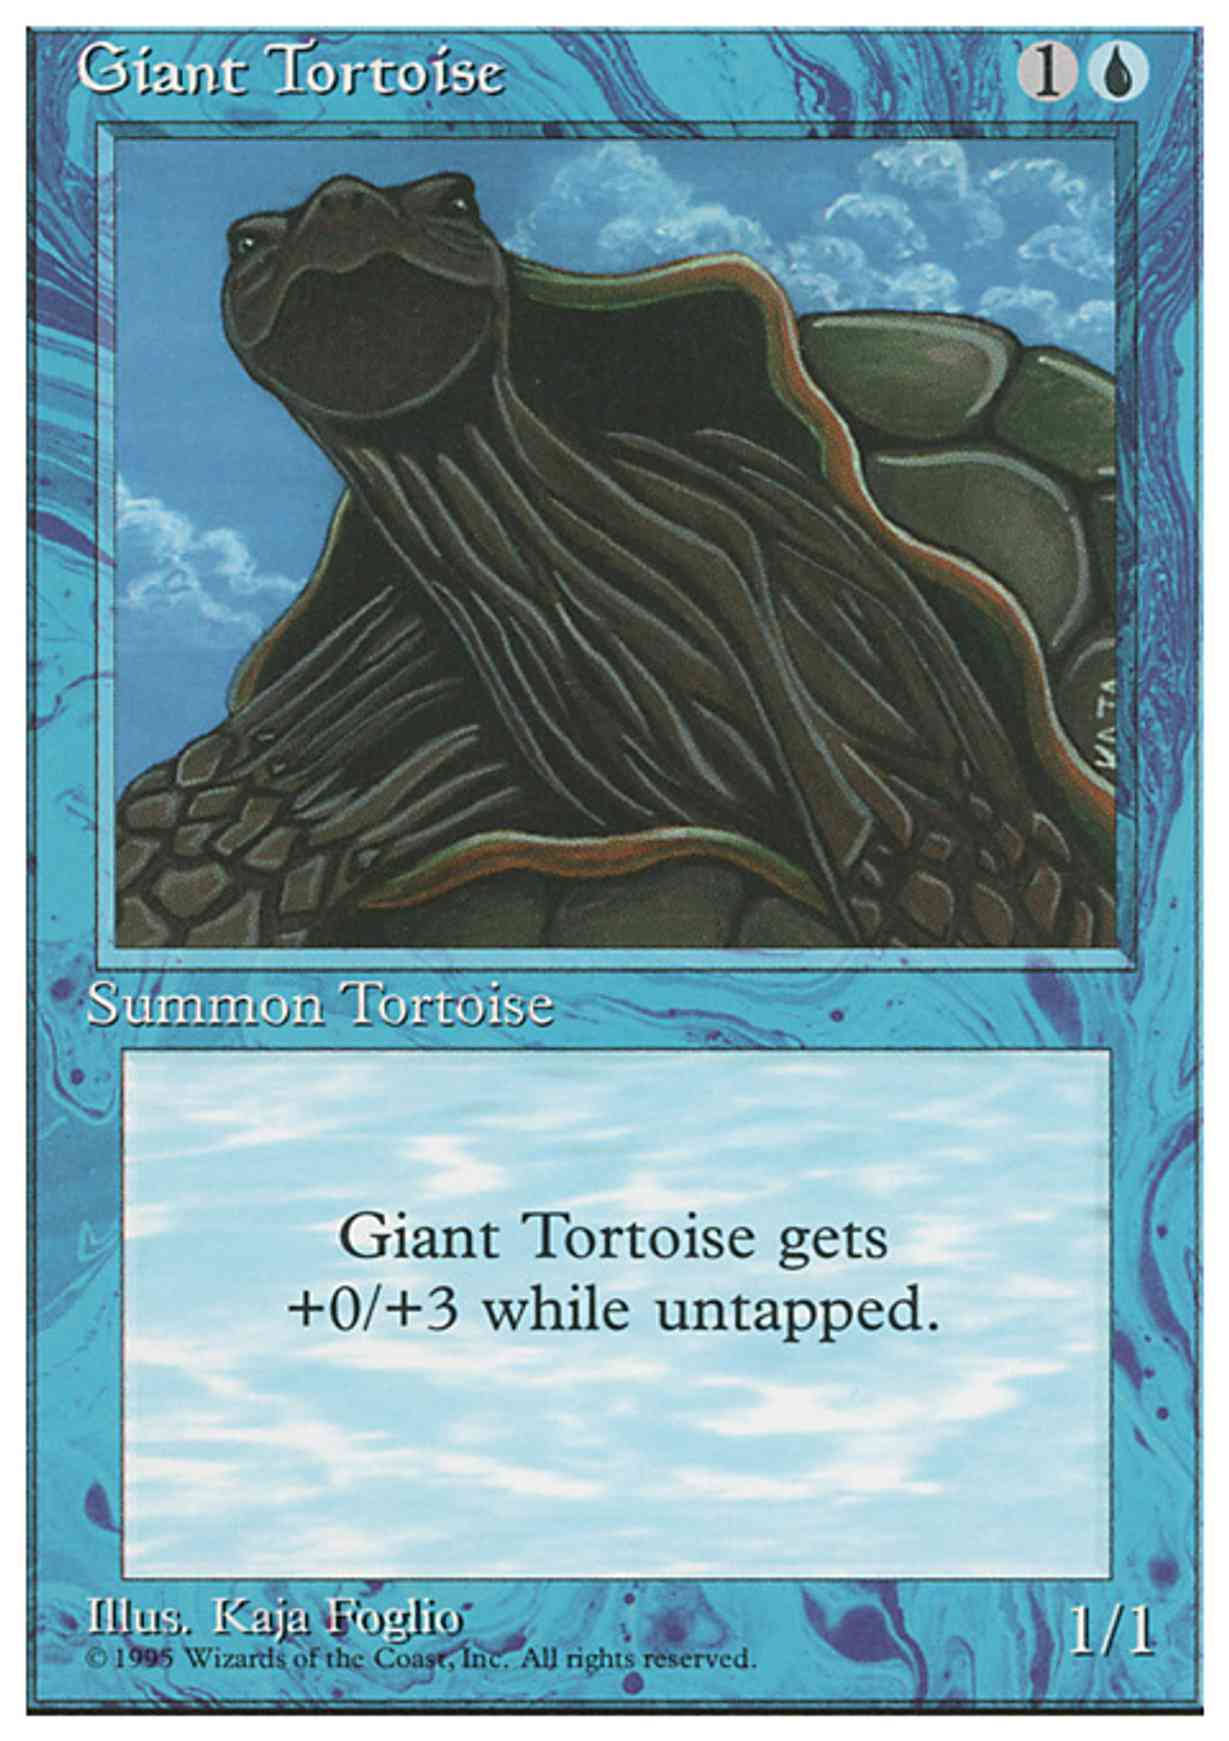 Giant Tortoise magic card front